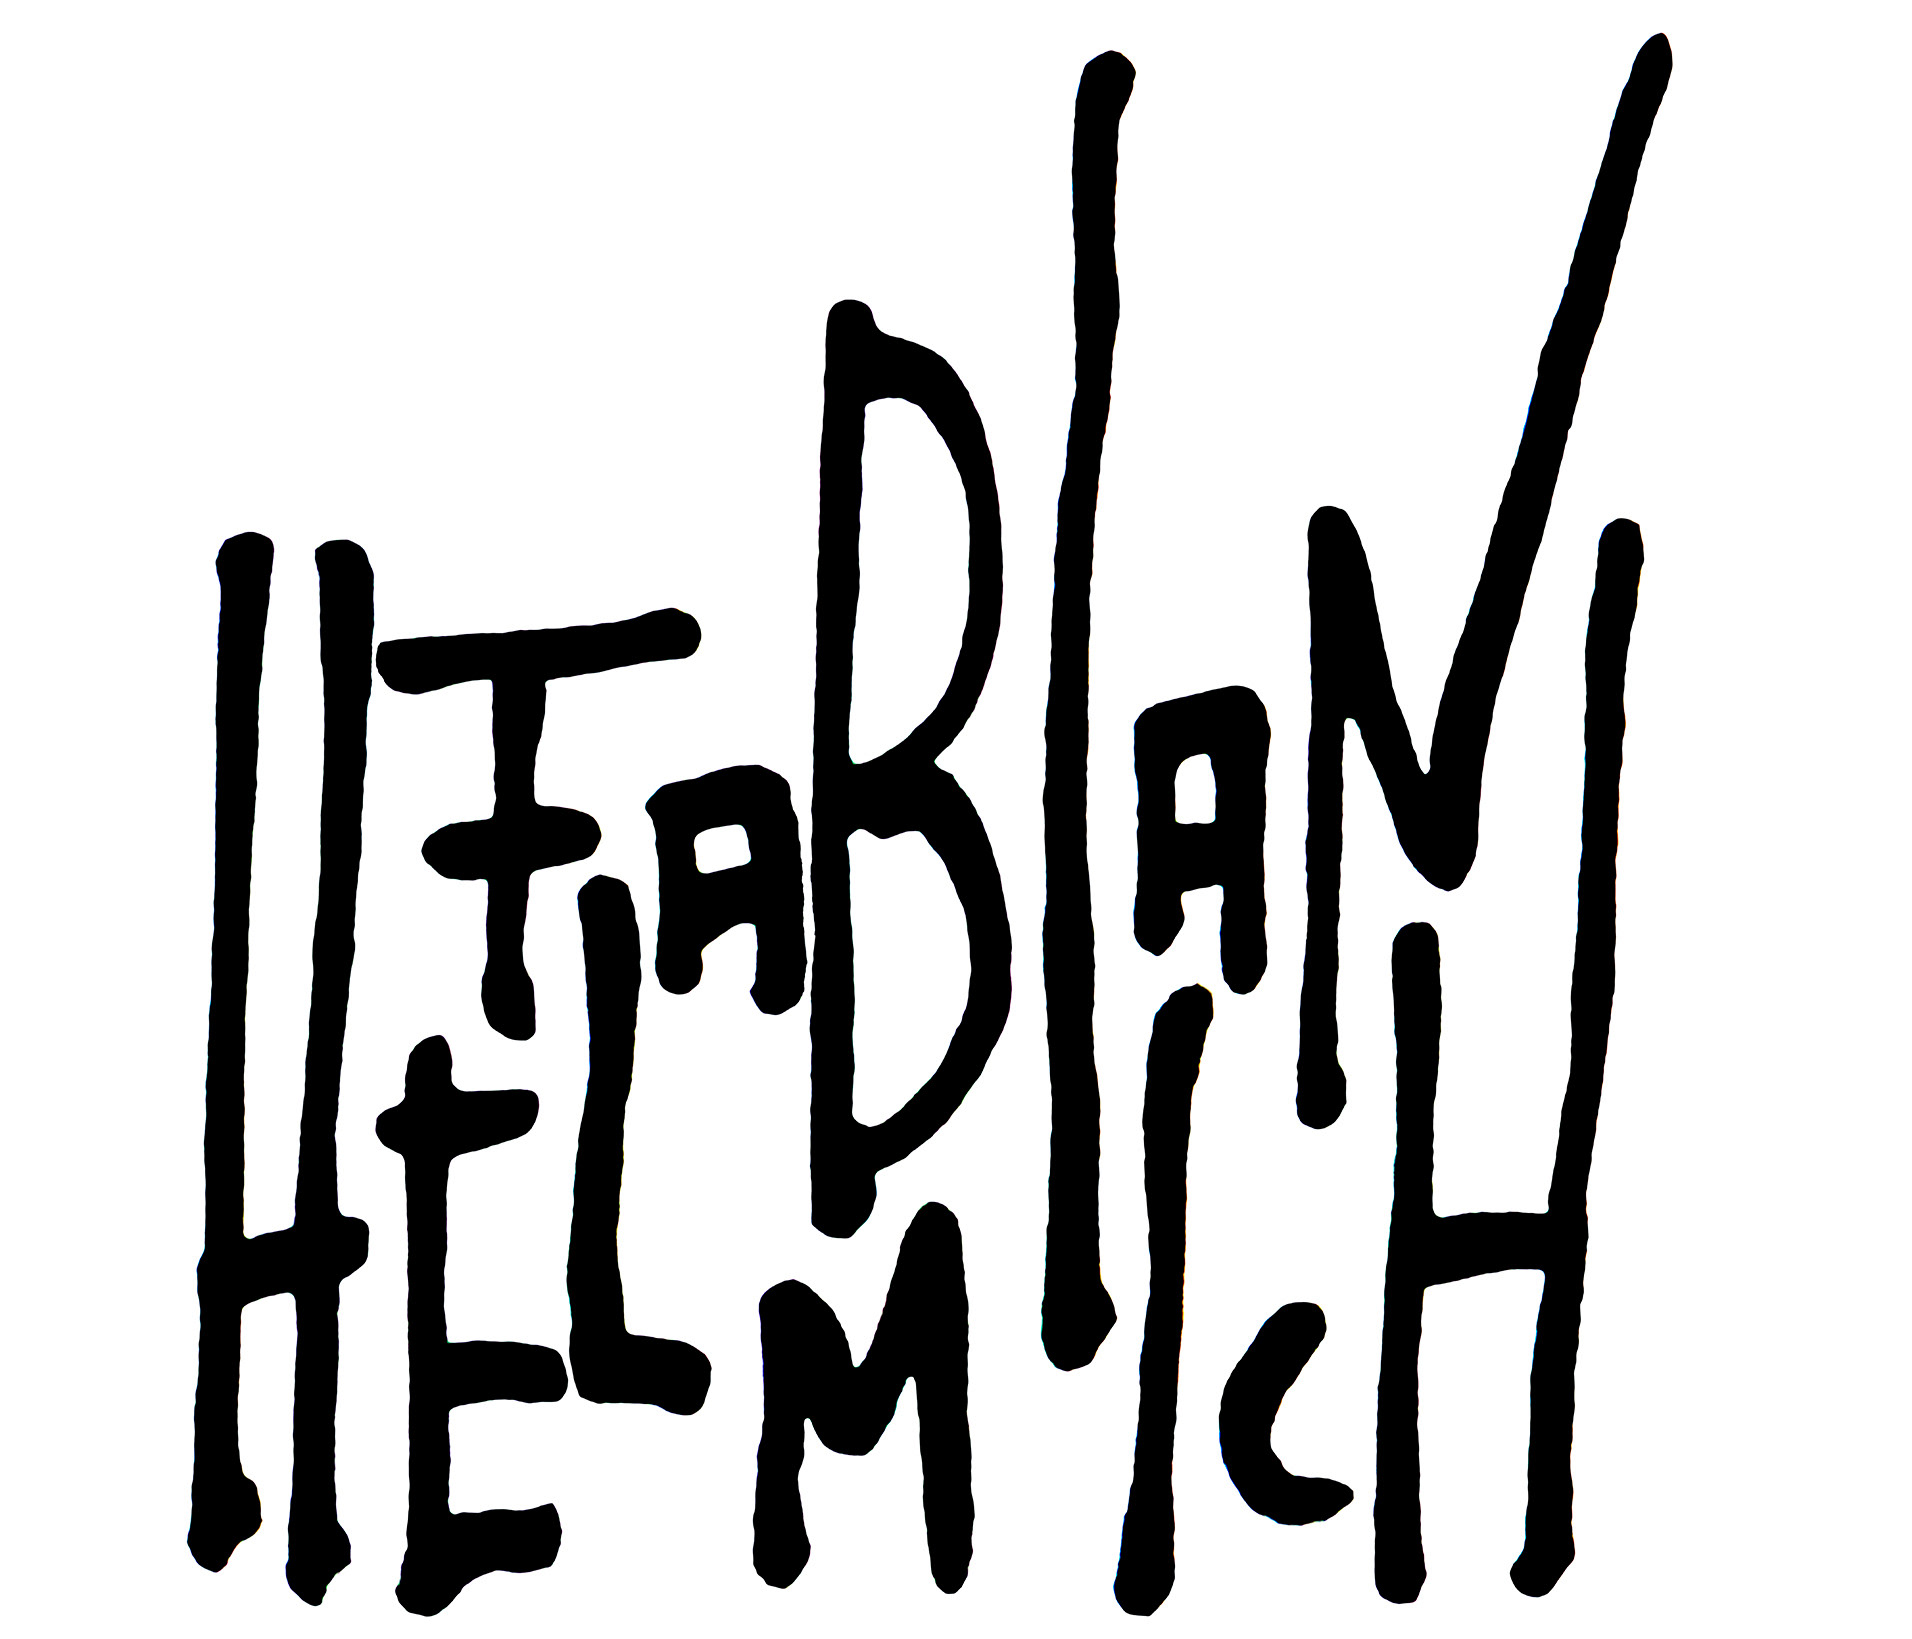 Fabian Helmich